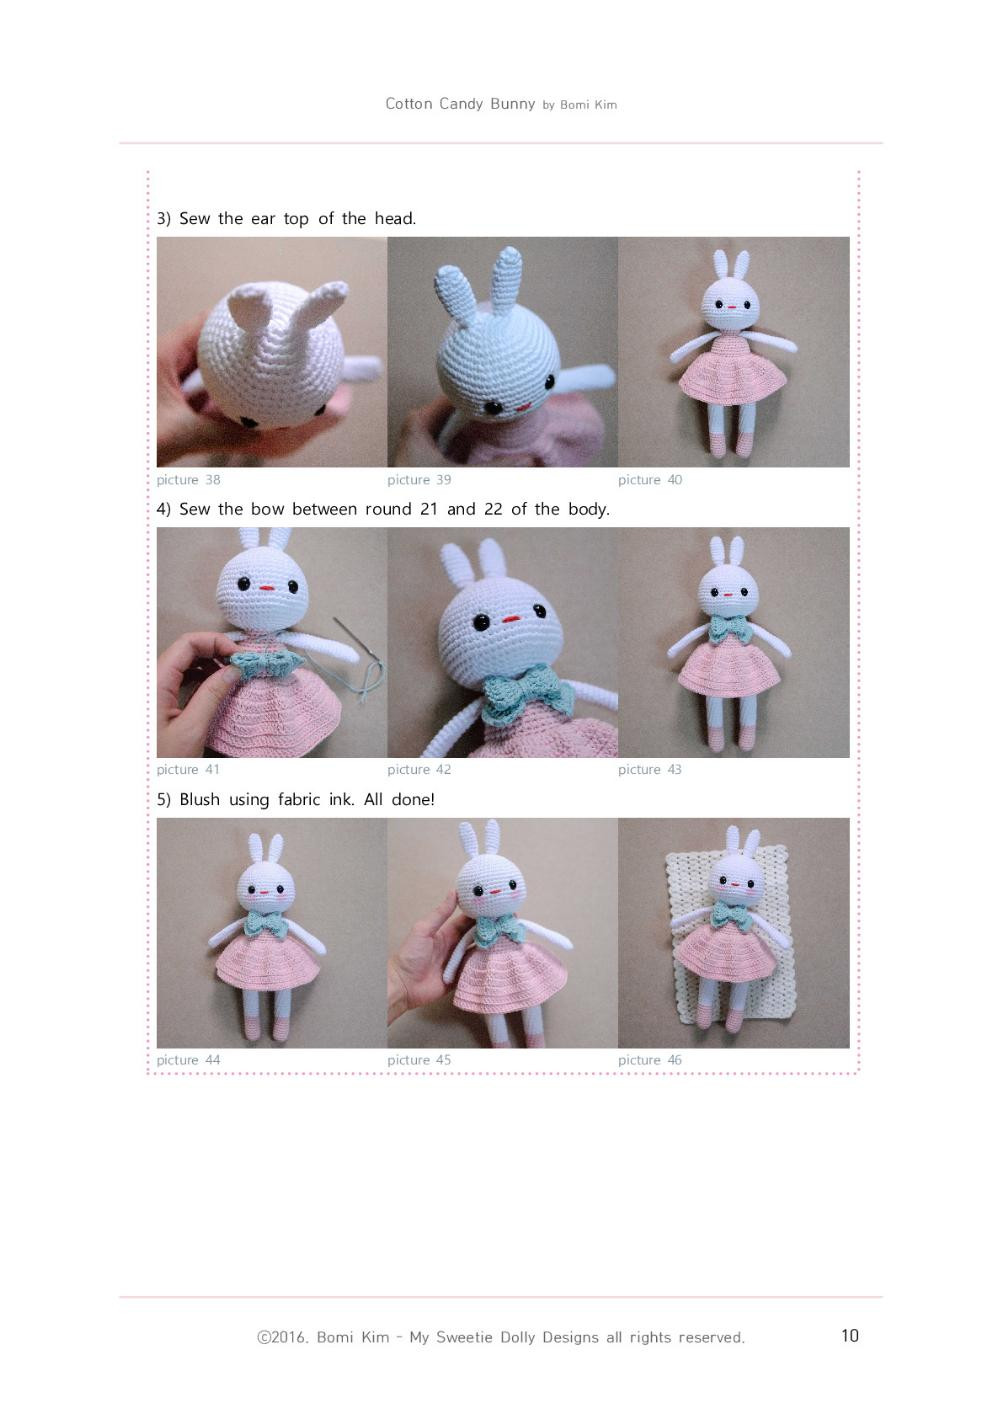 Cotton Candy Bunny wear a dress crochet pattern